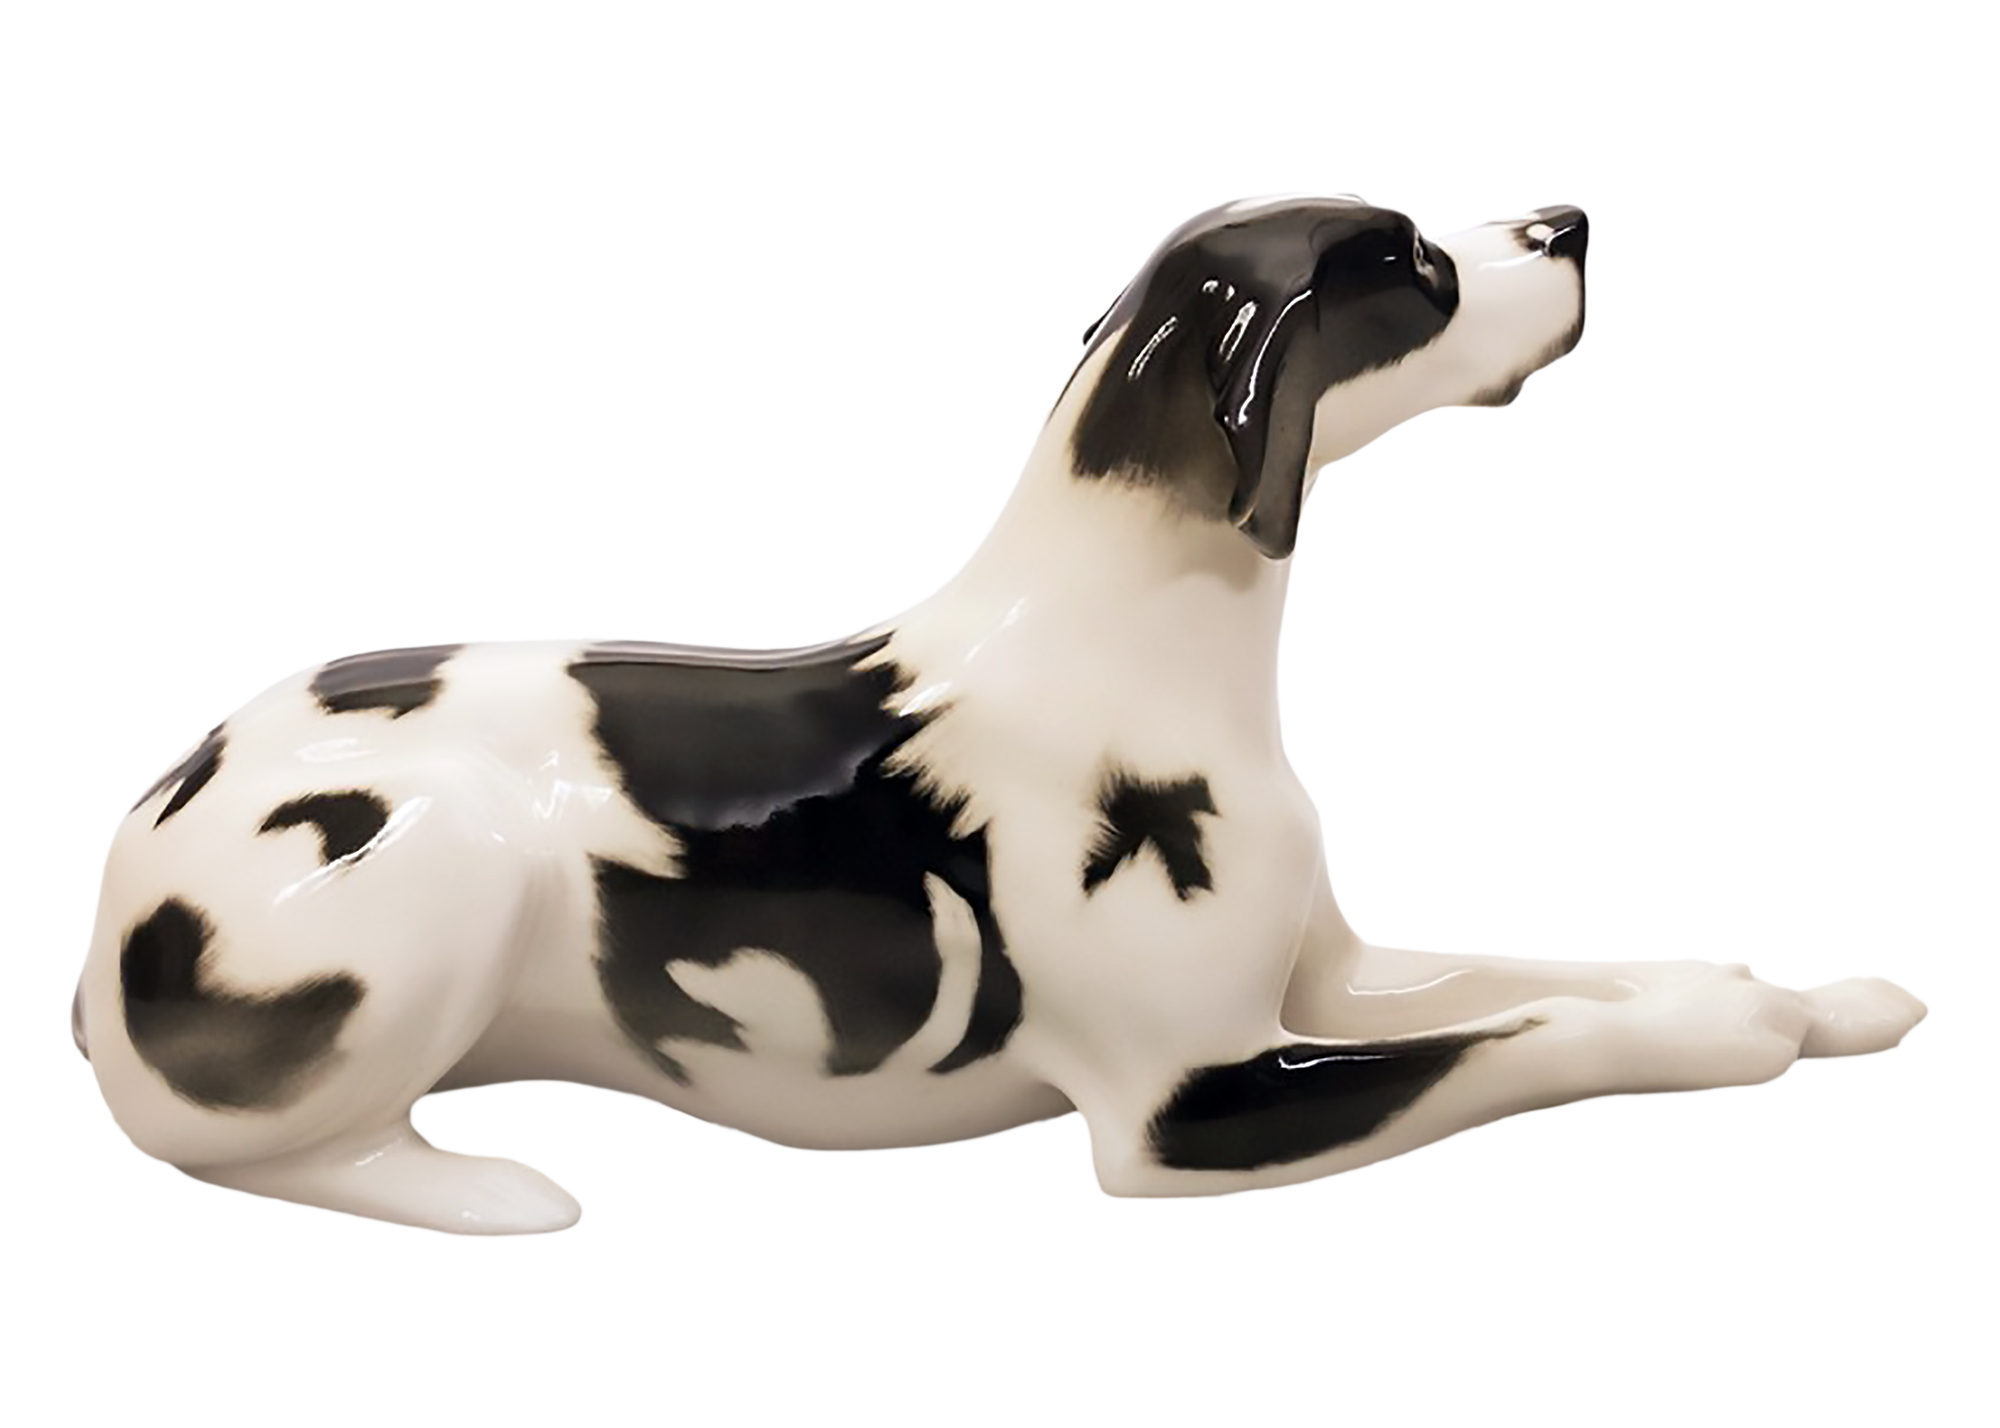 Buy Black & White Pointer Dog Figurine at GoldenCockerel.com